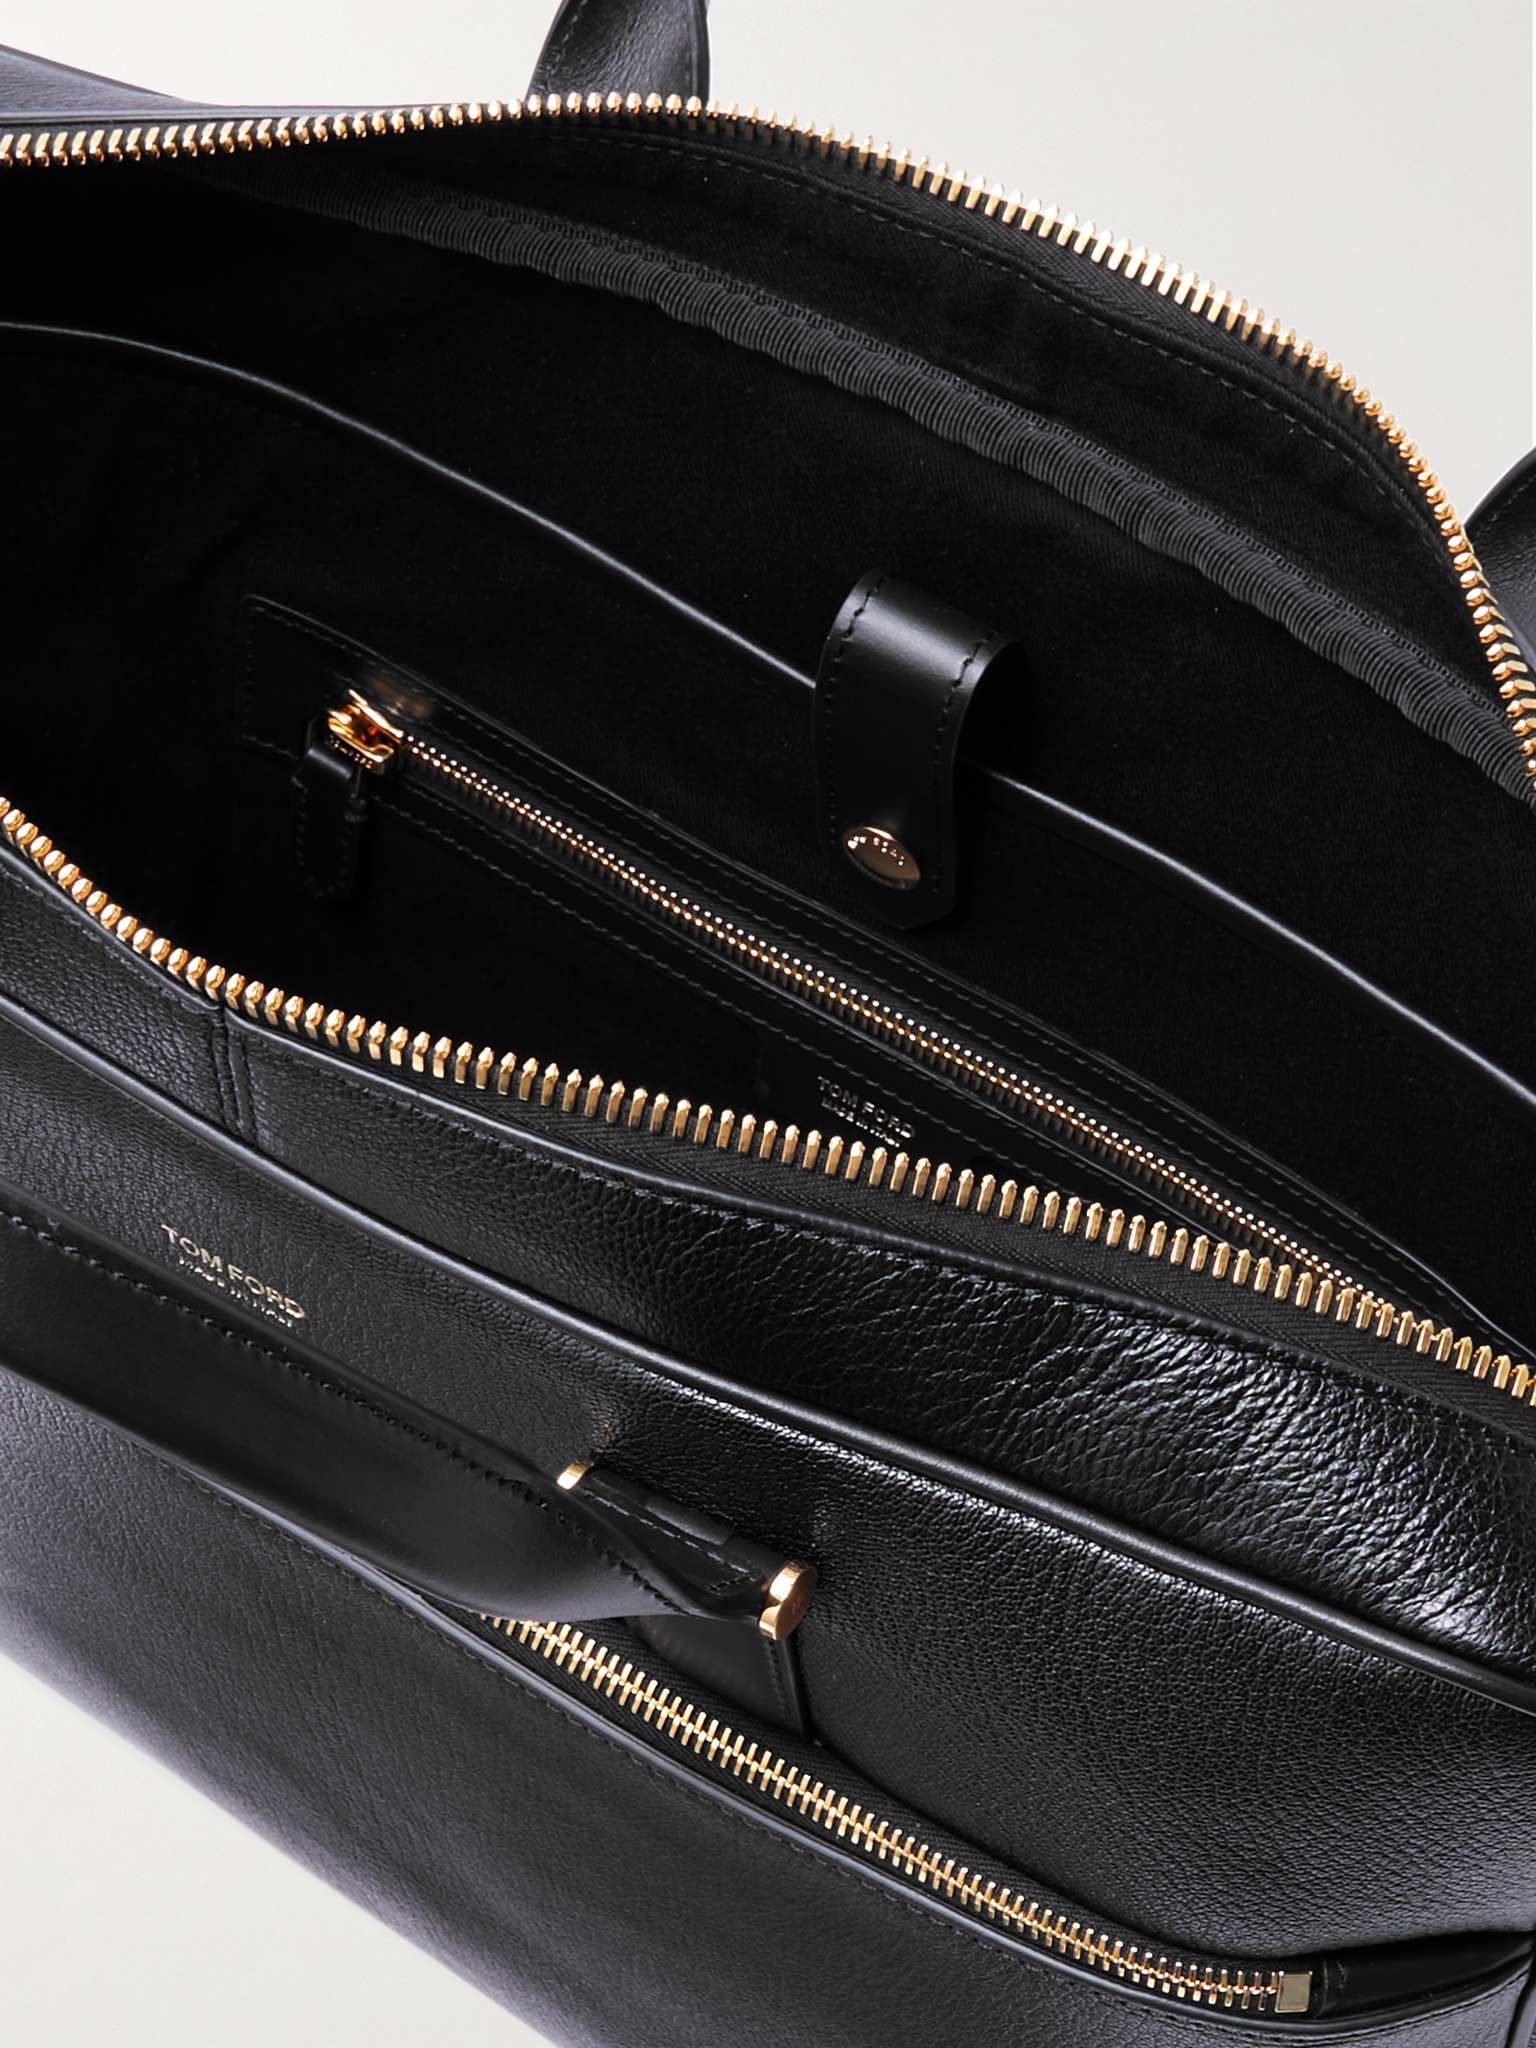 Full-Grain Leather Briefcase - 2